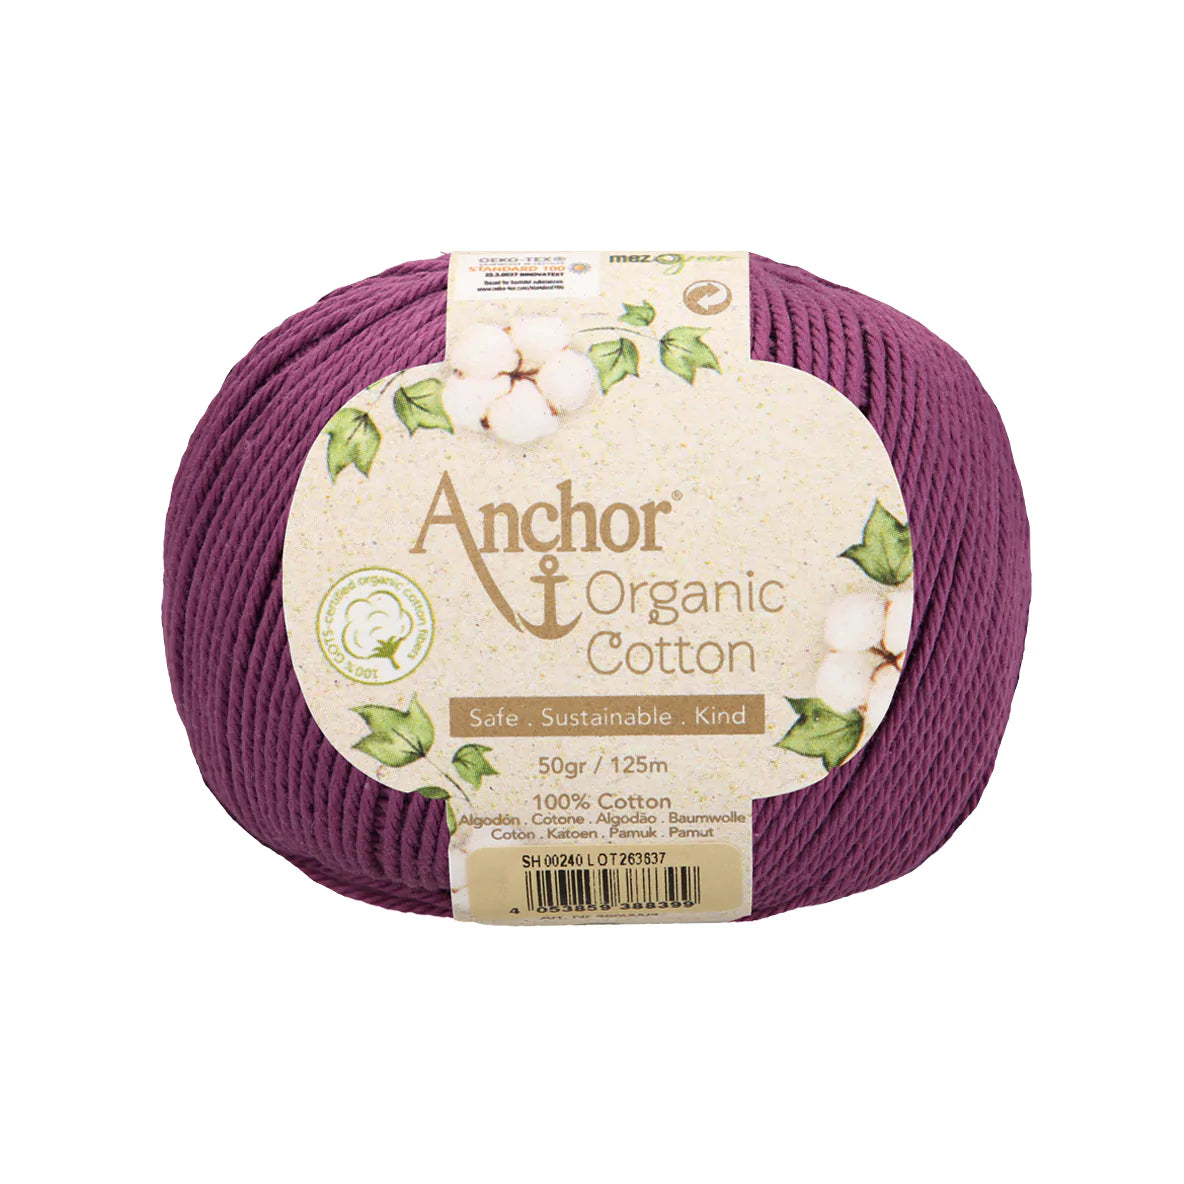 Anchor - Organic Cotton - 50g Ball - Plum Purple